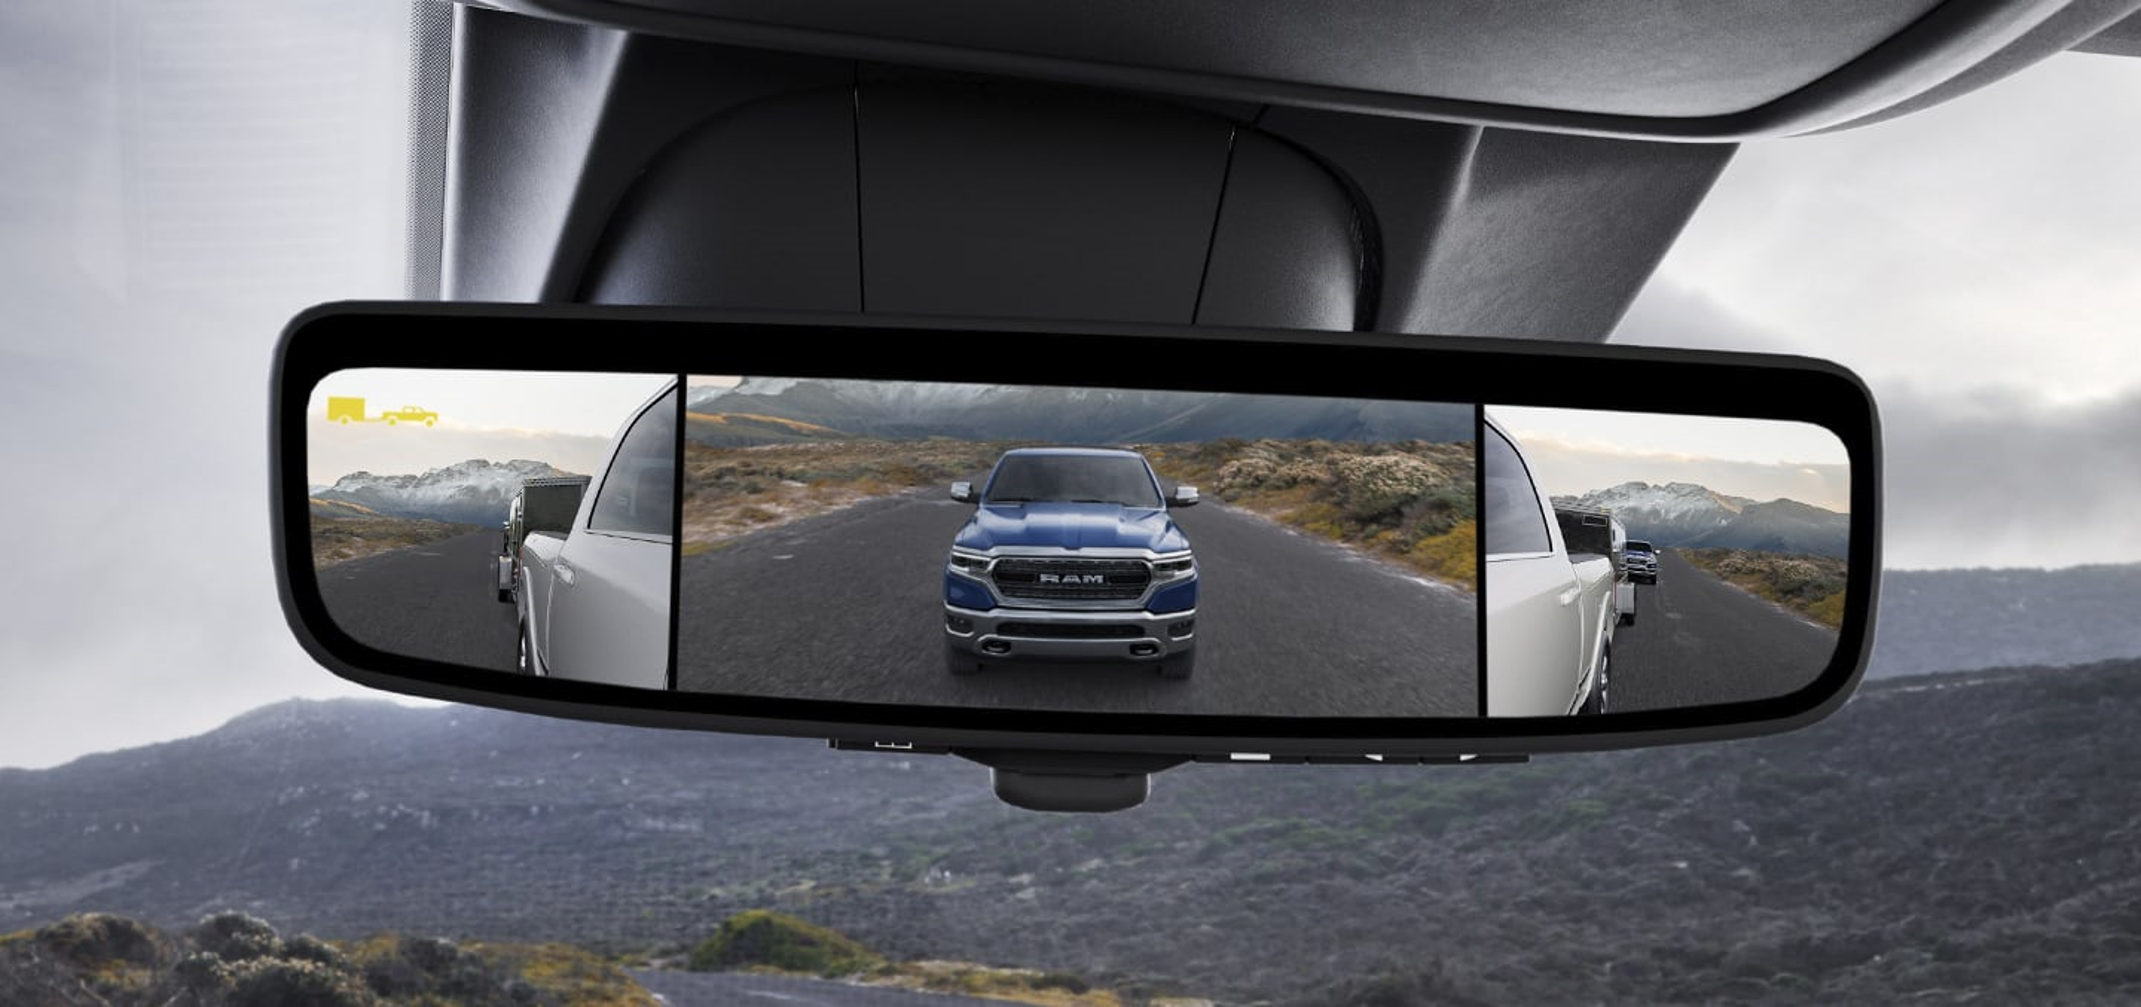 Camera behind interior rear-view mirror - Volvo Cars Global Media